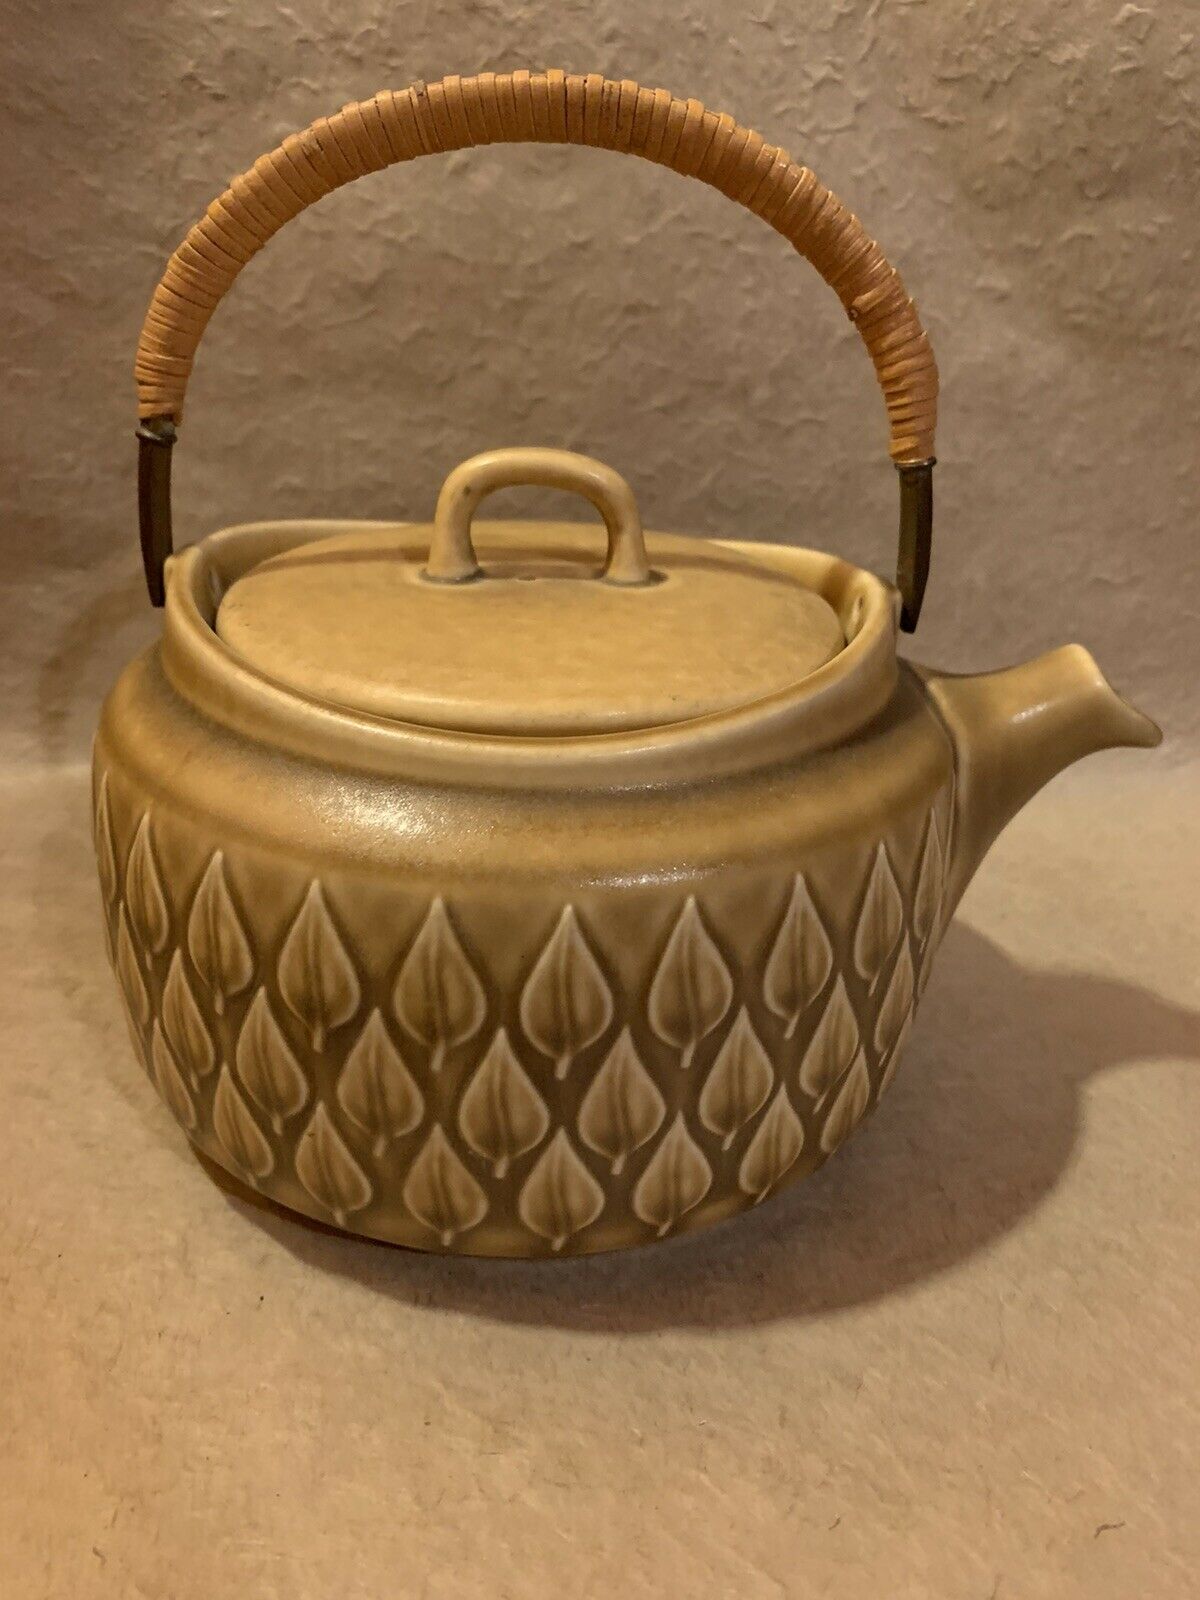 Jens Quistgaard "relief" Teapot Vintage Mcm Stoneware Bing & Grondahl Denmark